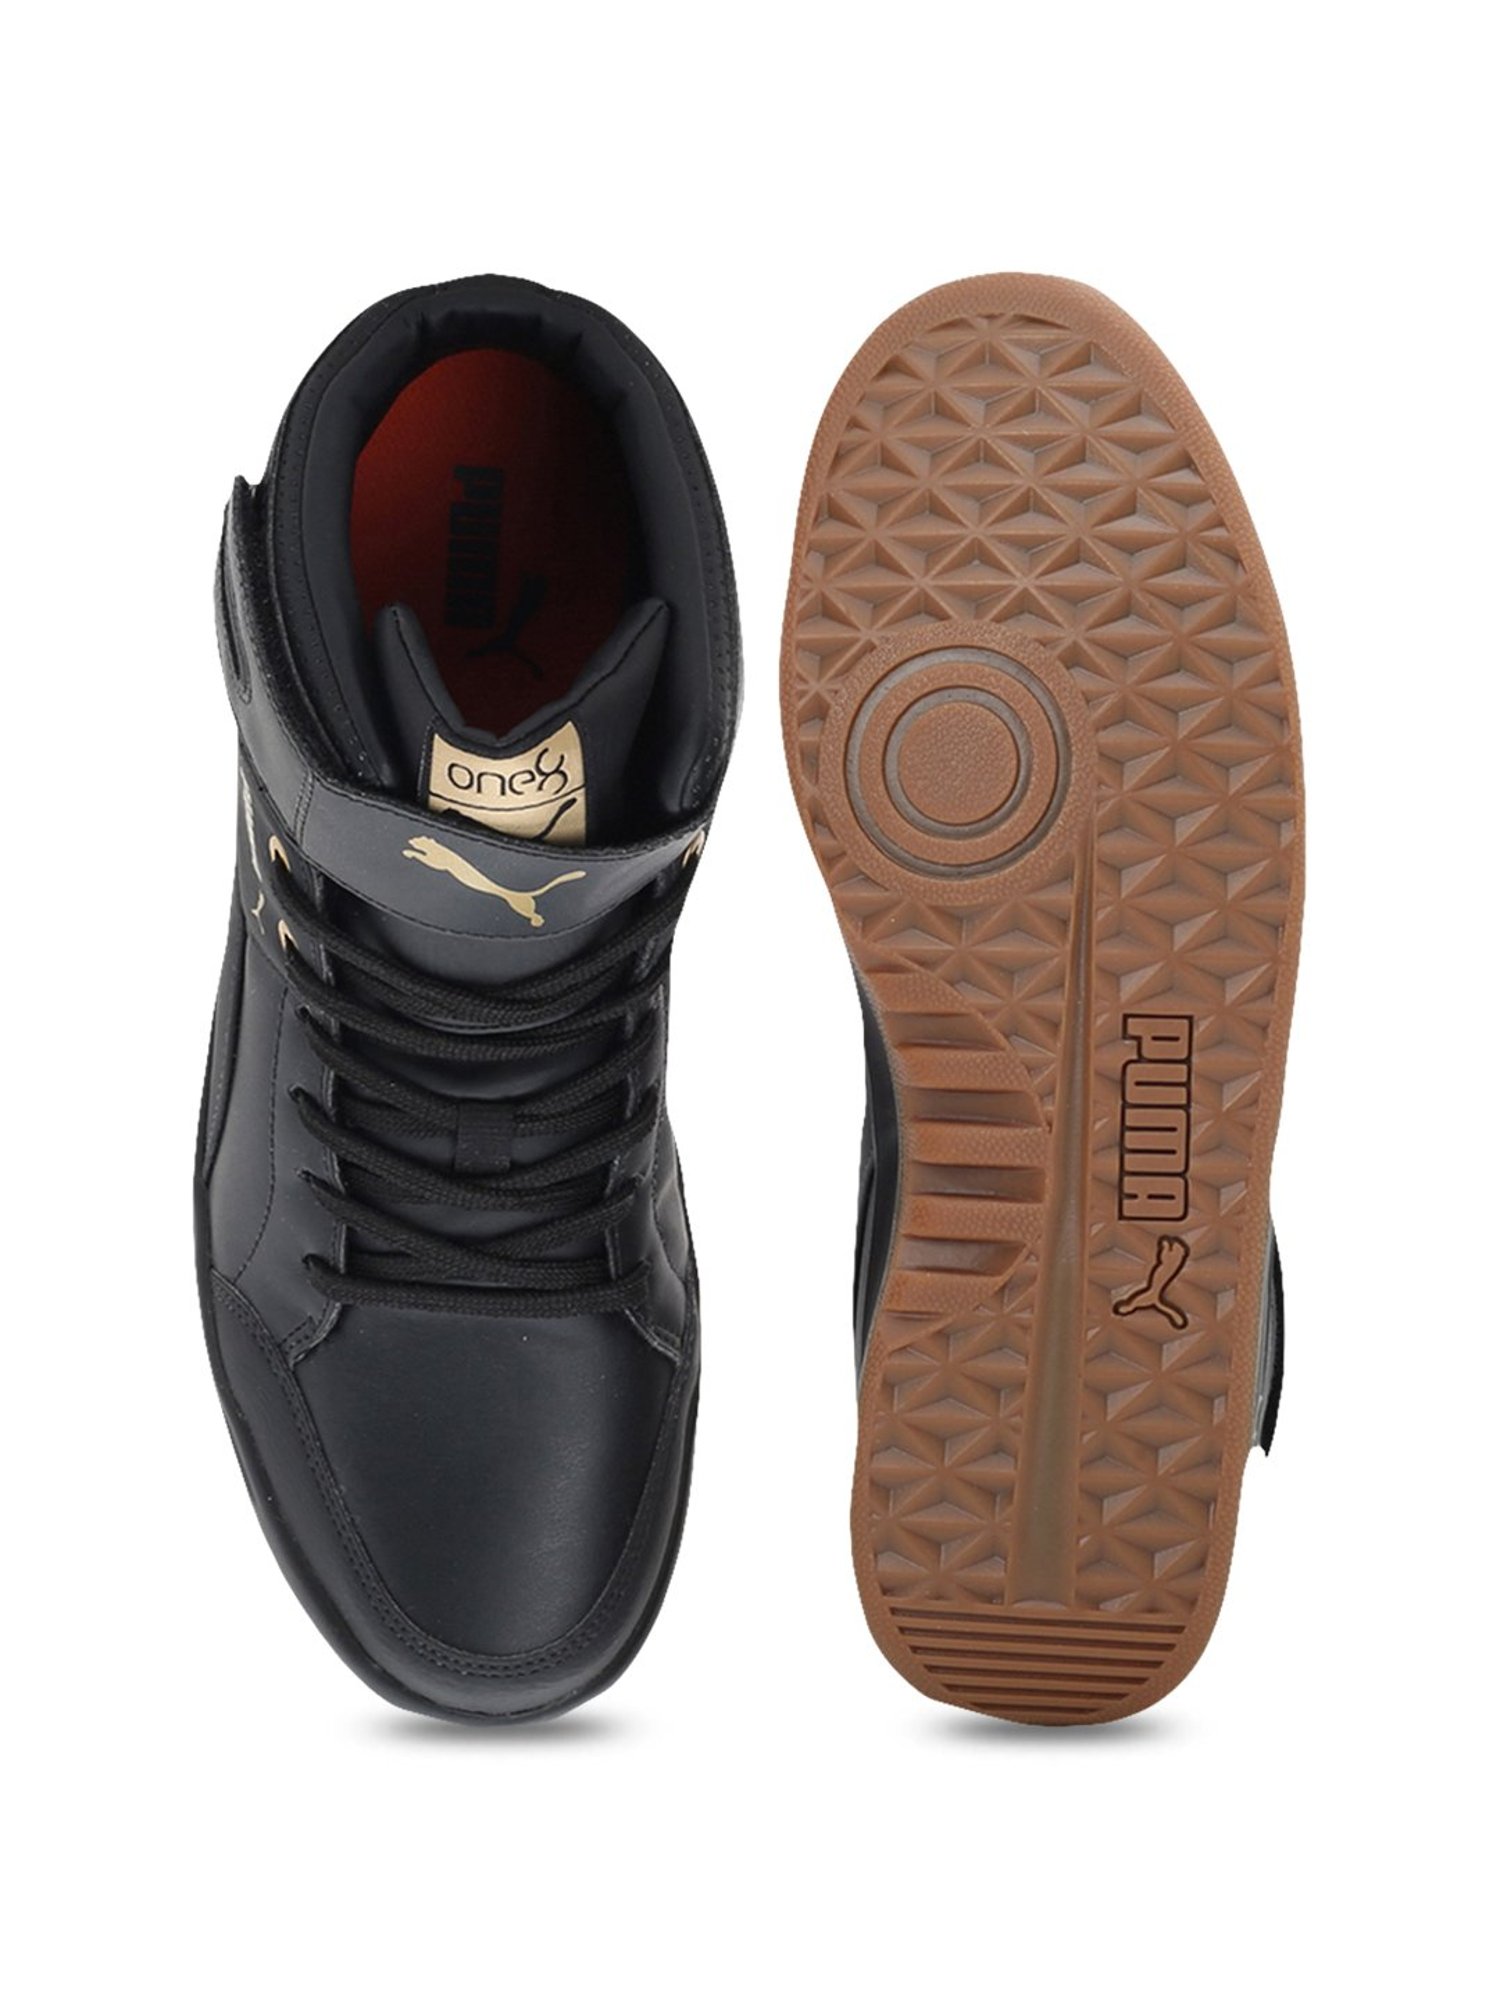 puma one8 black shoes